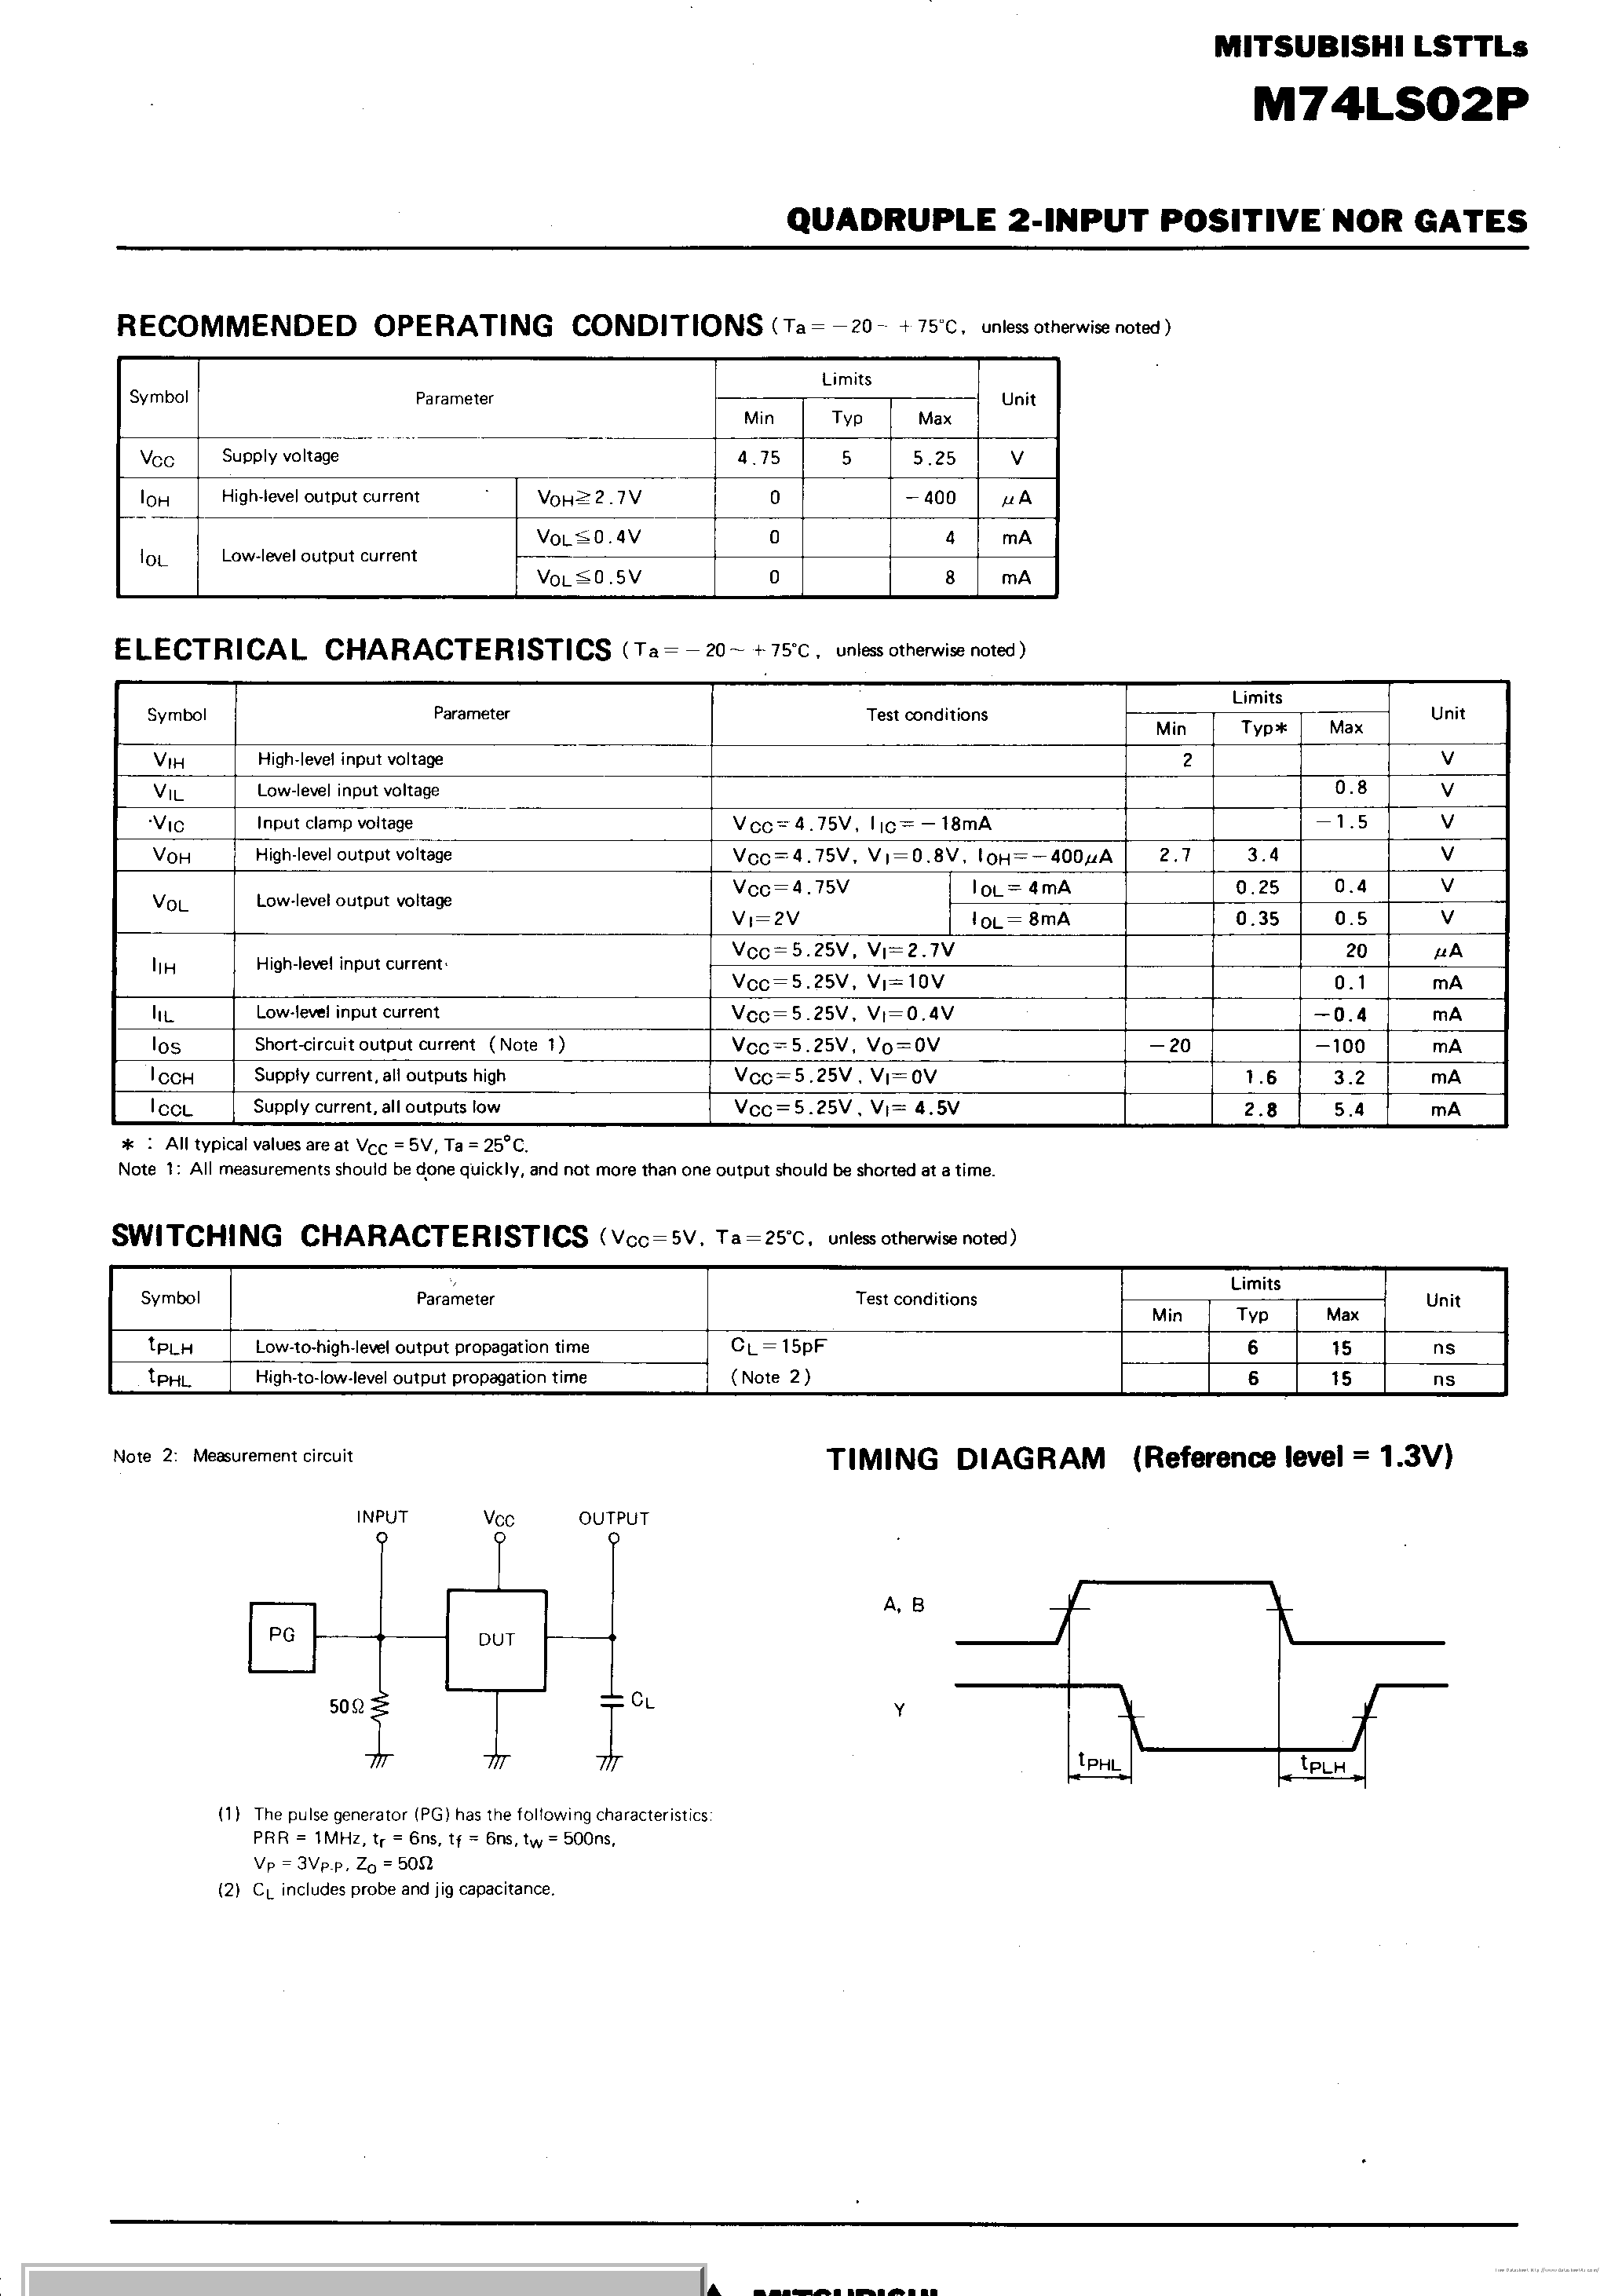 Datasheet M74LS02P - page 2